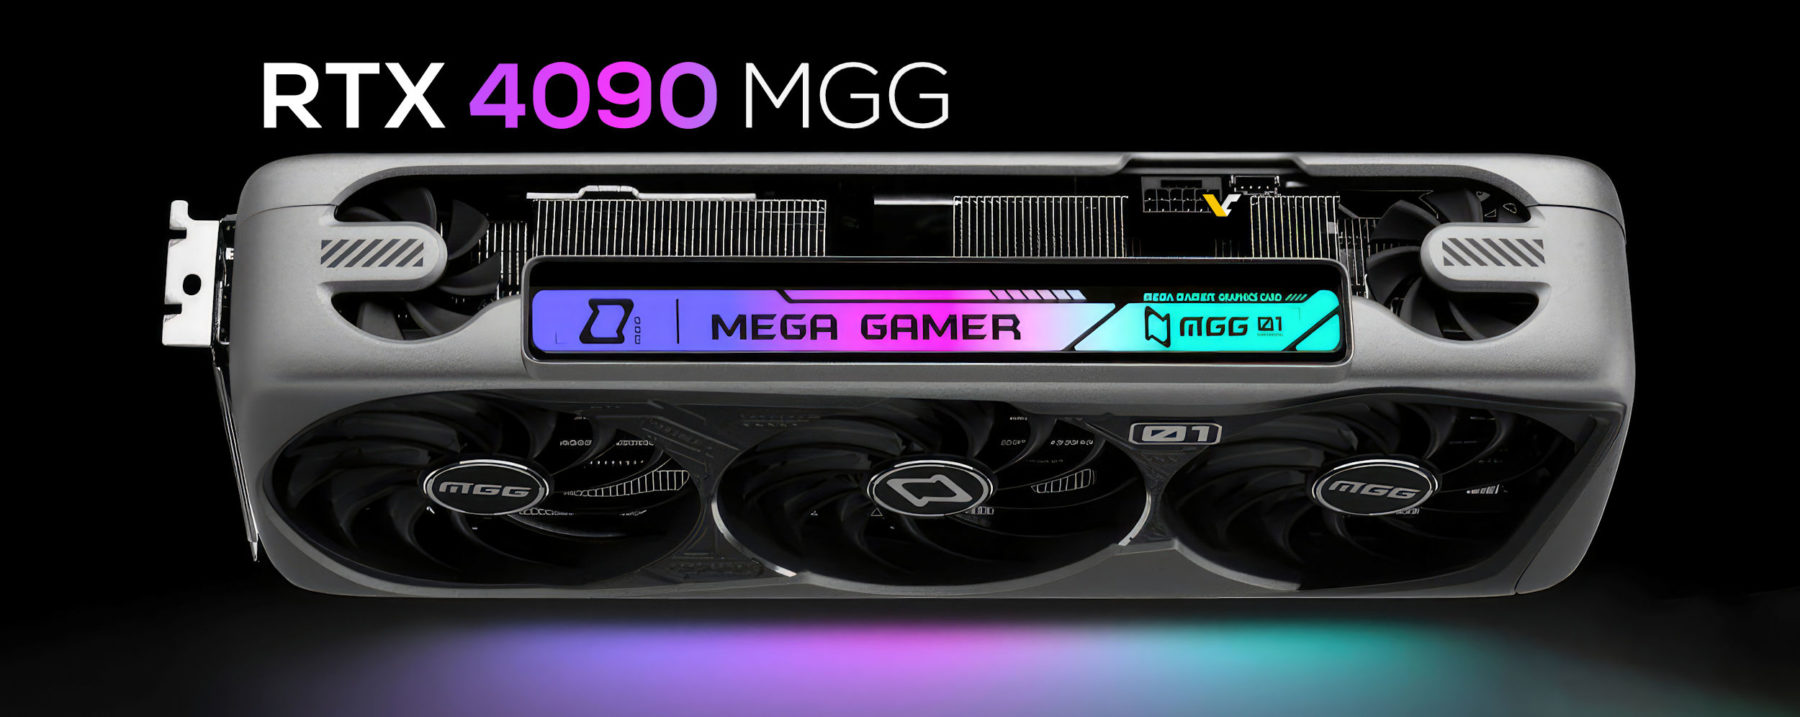 MaxSun GeForce RTX 4090 MGG